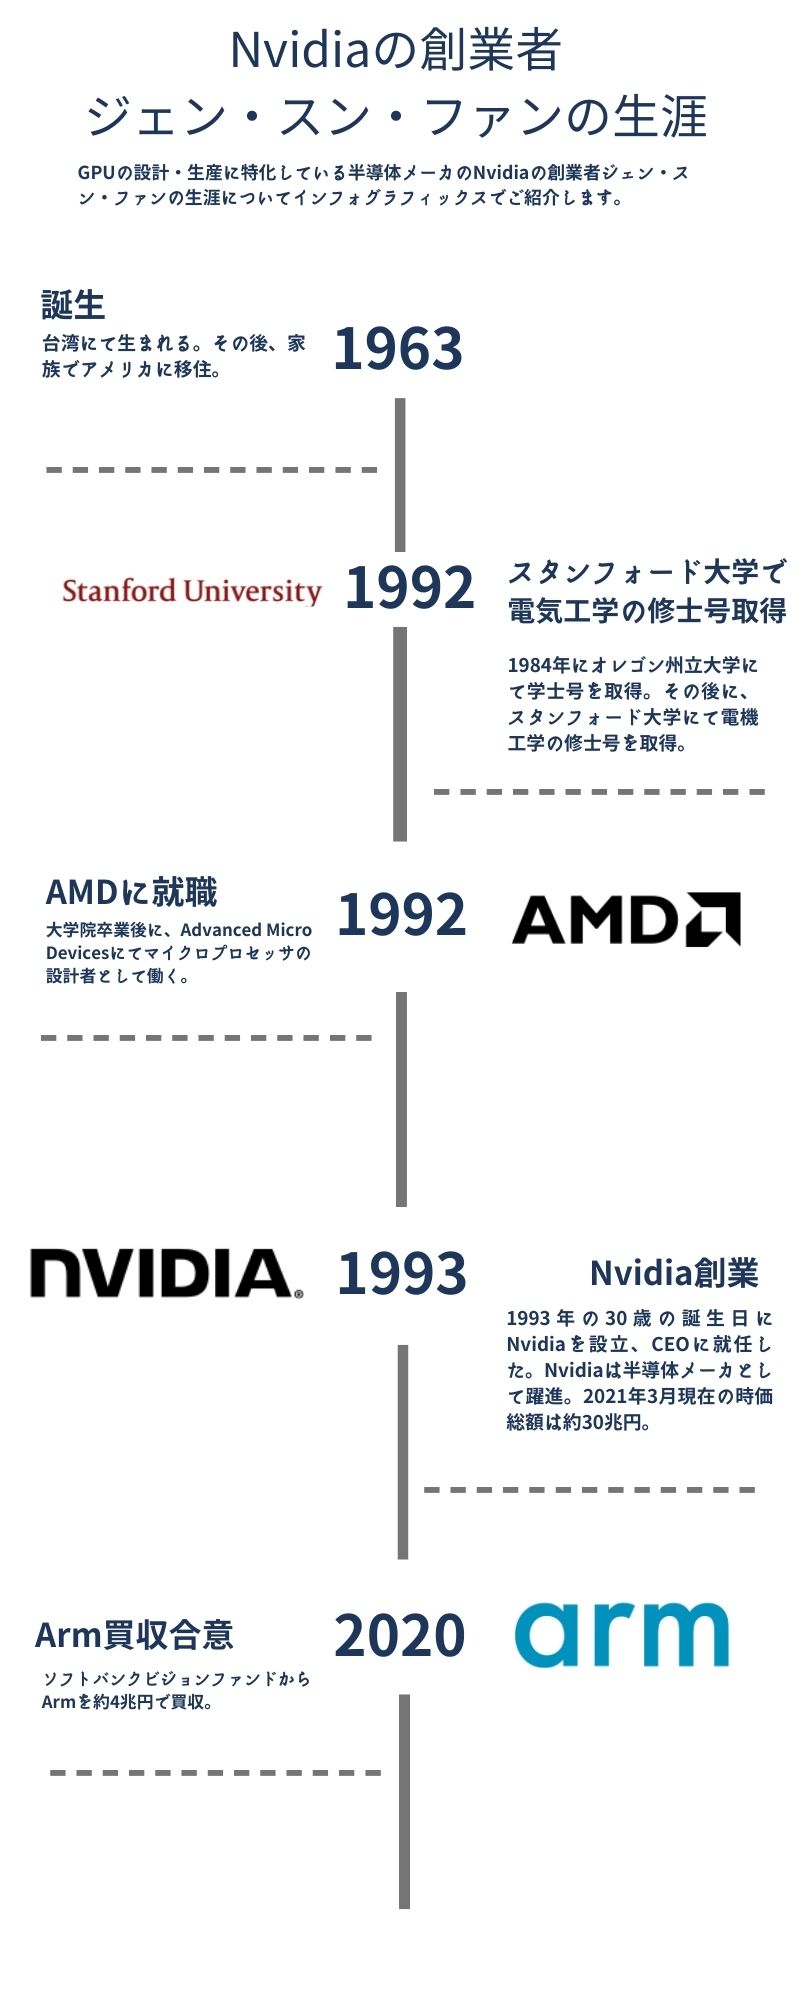 Nvidiaの創業者ジェン・スン・ファンの生涯